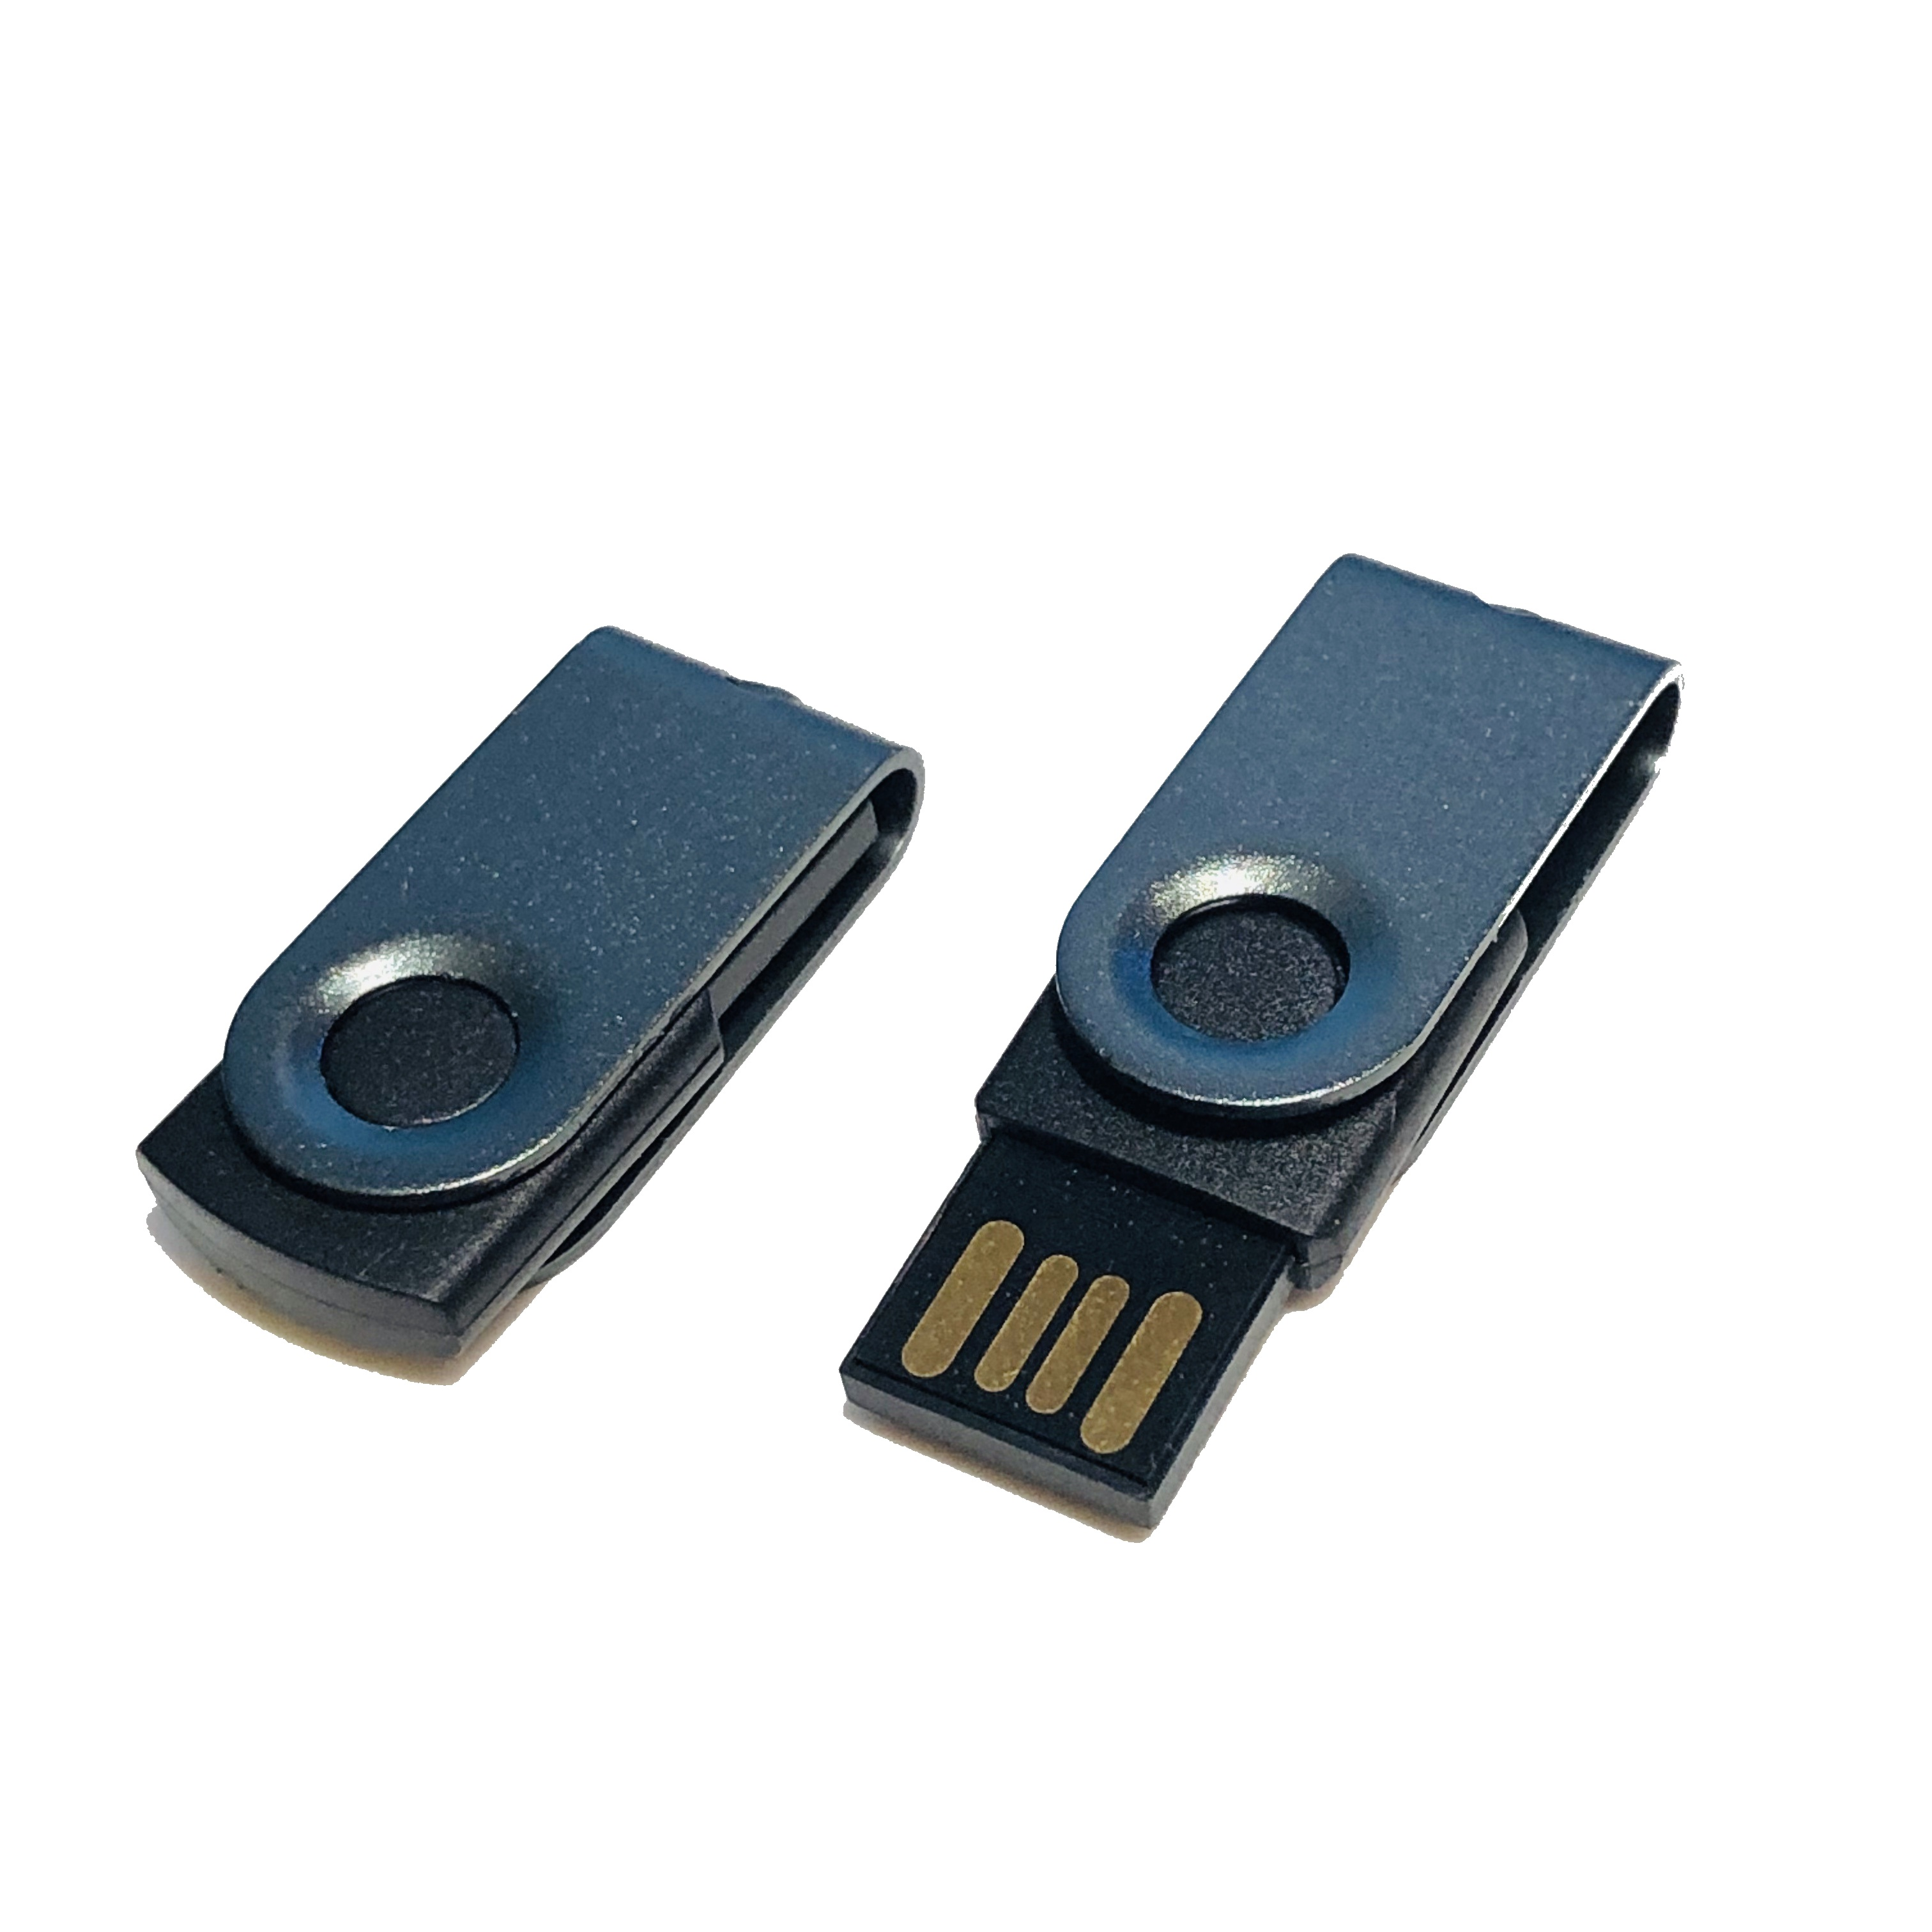 USB GERMANY ® MINI-SWIVEL 1 USB-Stick GB) (Schwarz-Graumetall